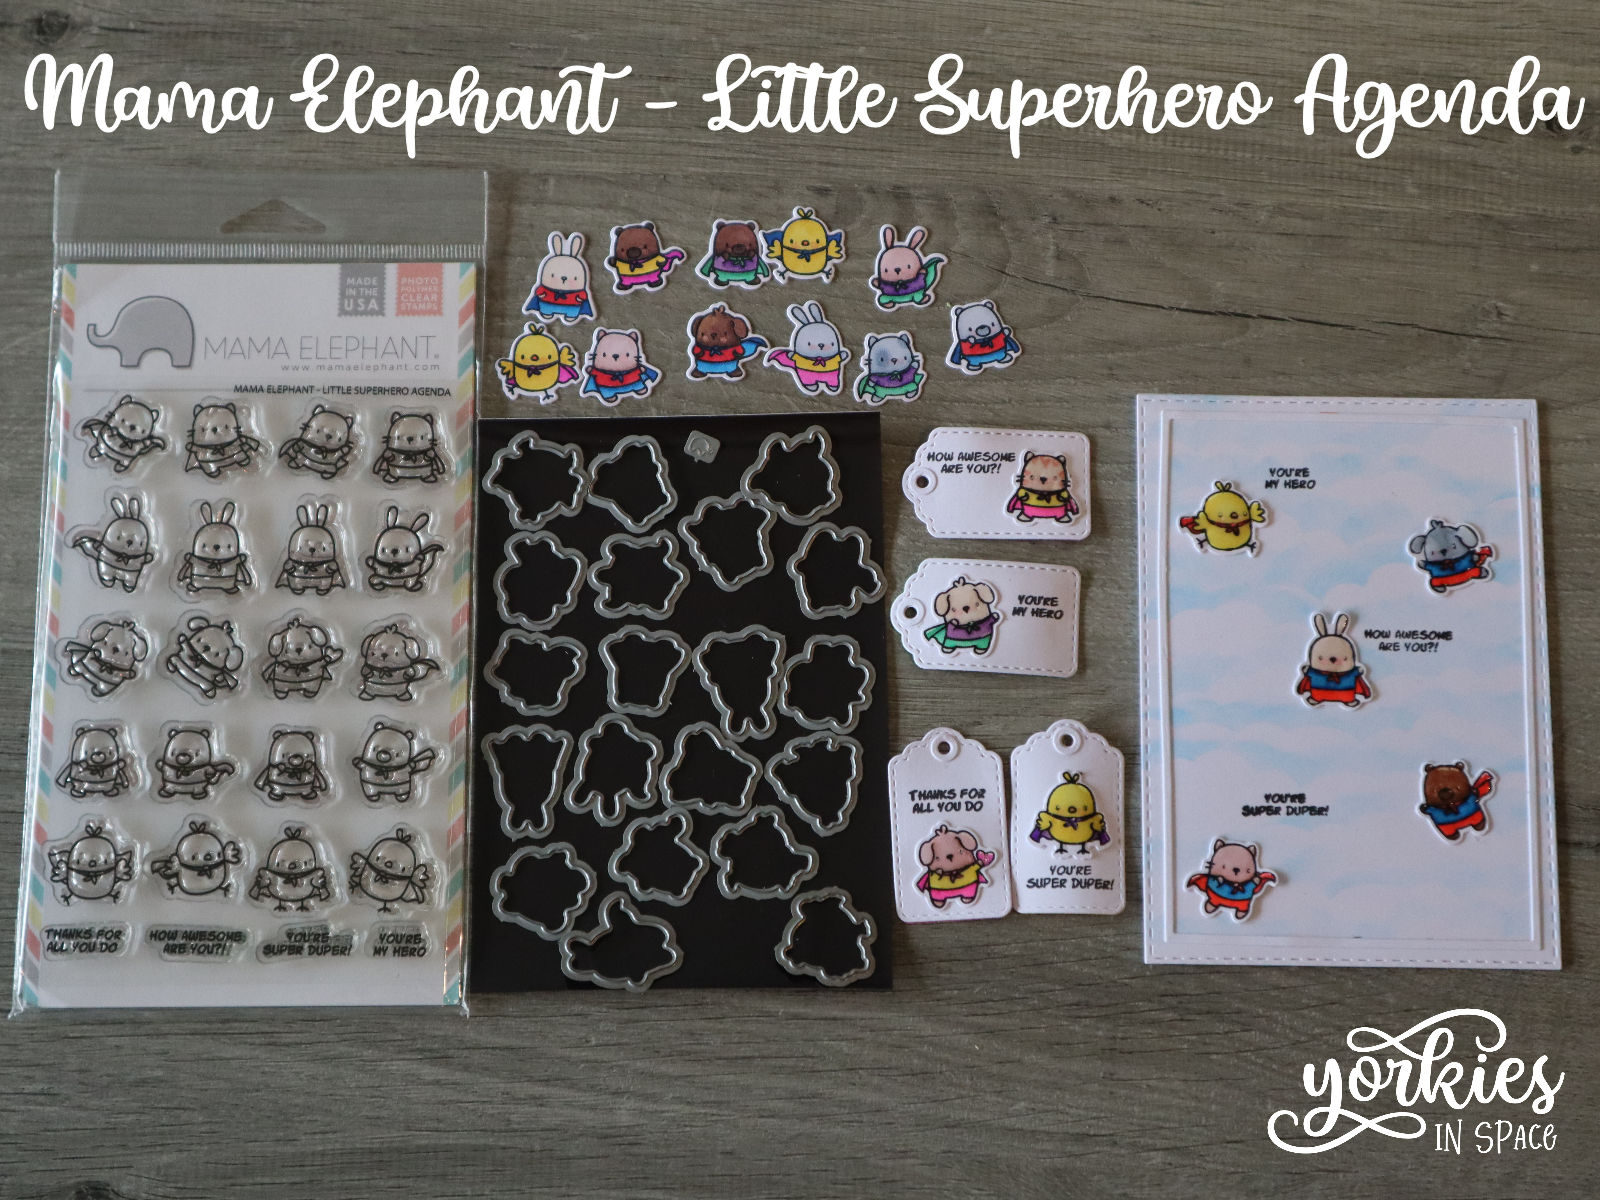 Mama Elephant – Little Superhero Agenda